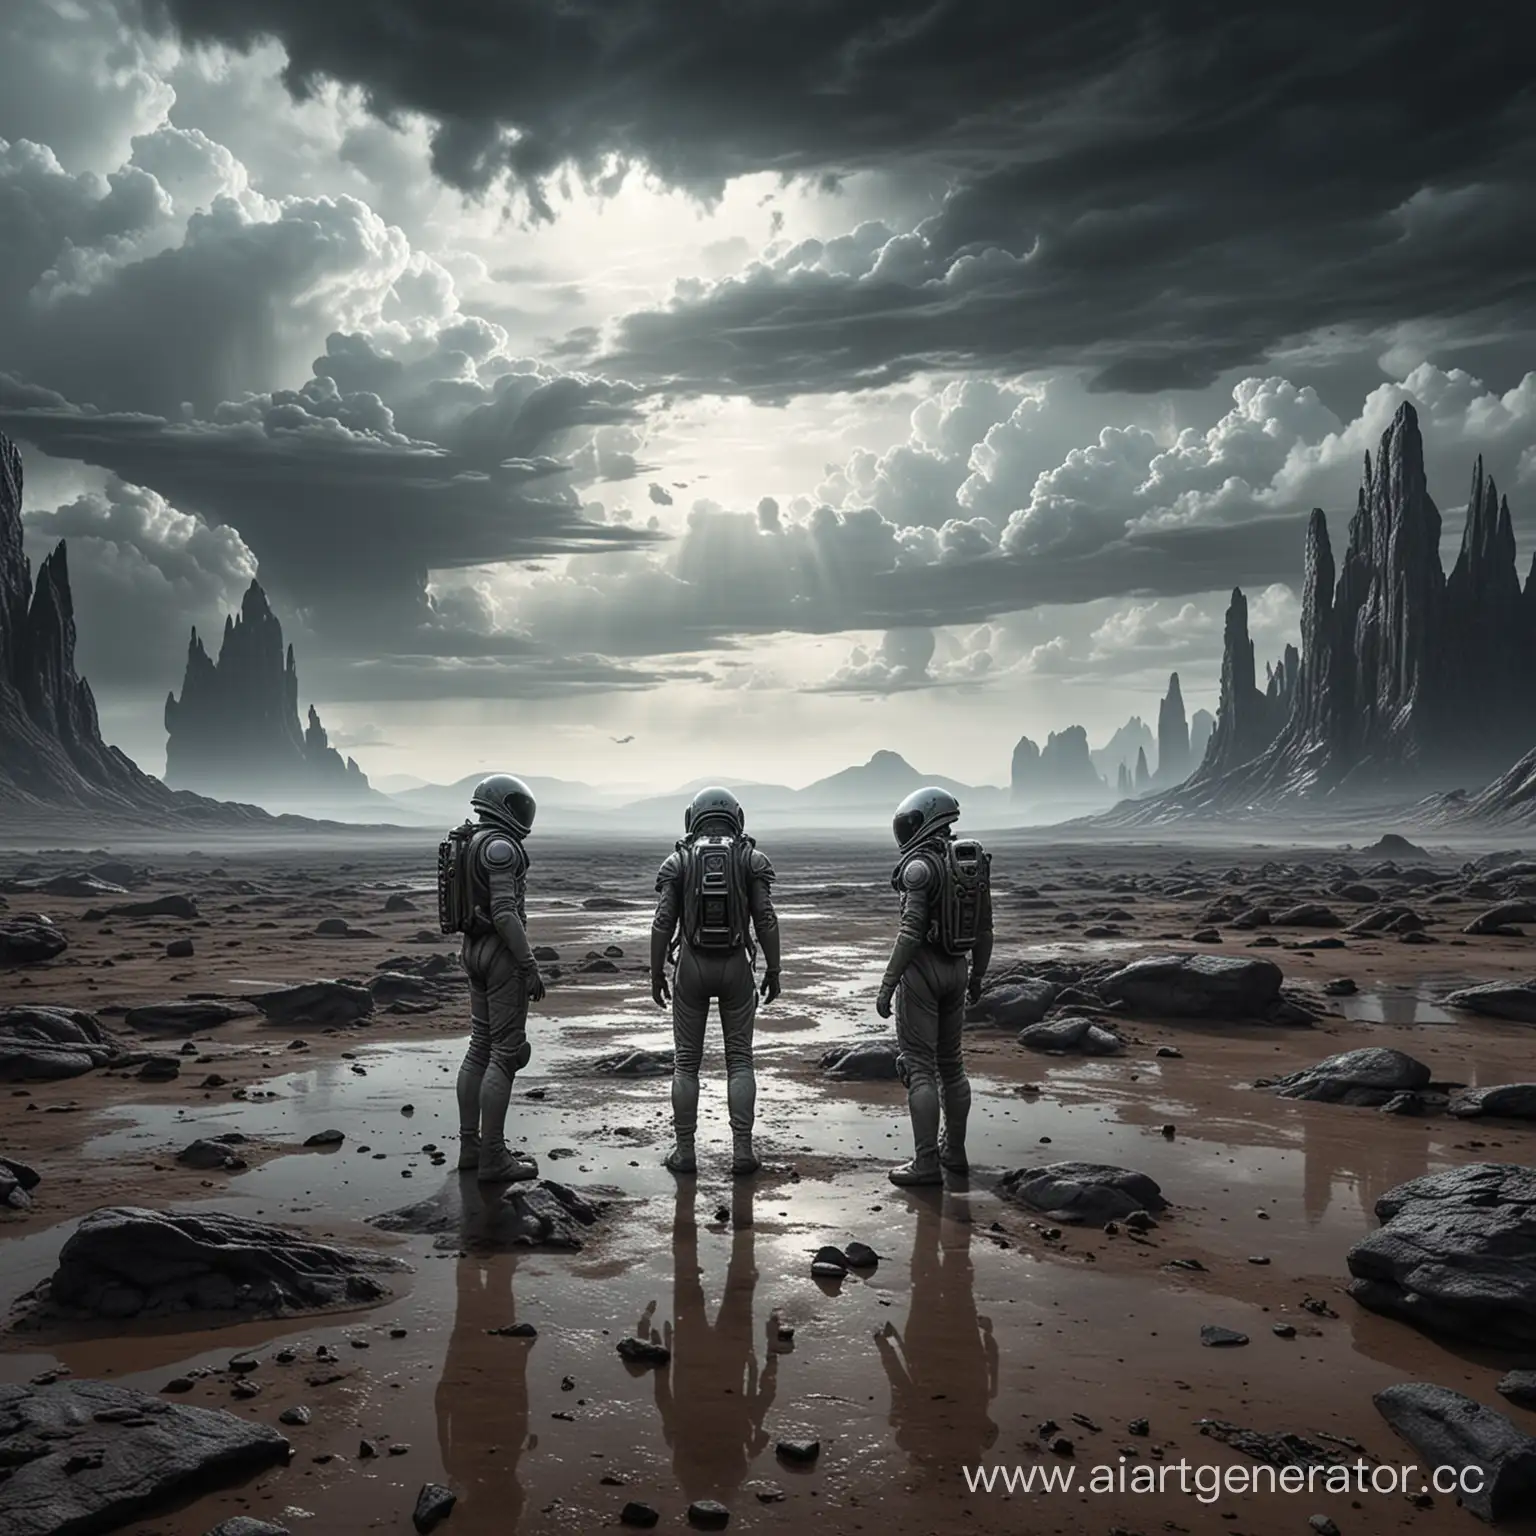 alien lanscape, humans in spacesuits meeting aliens, desolate, cloudy